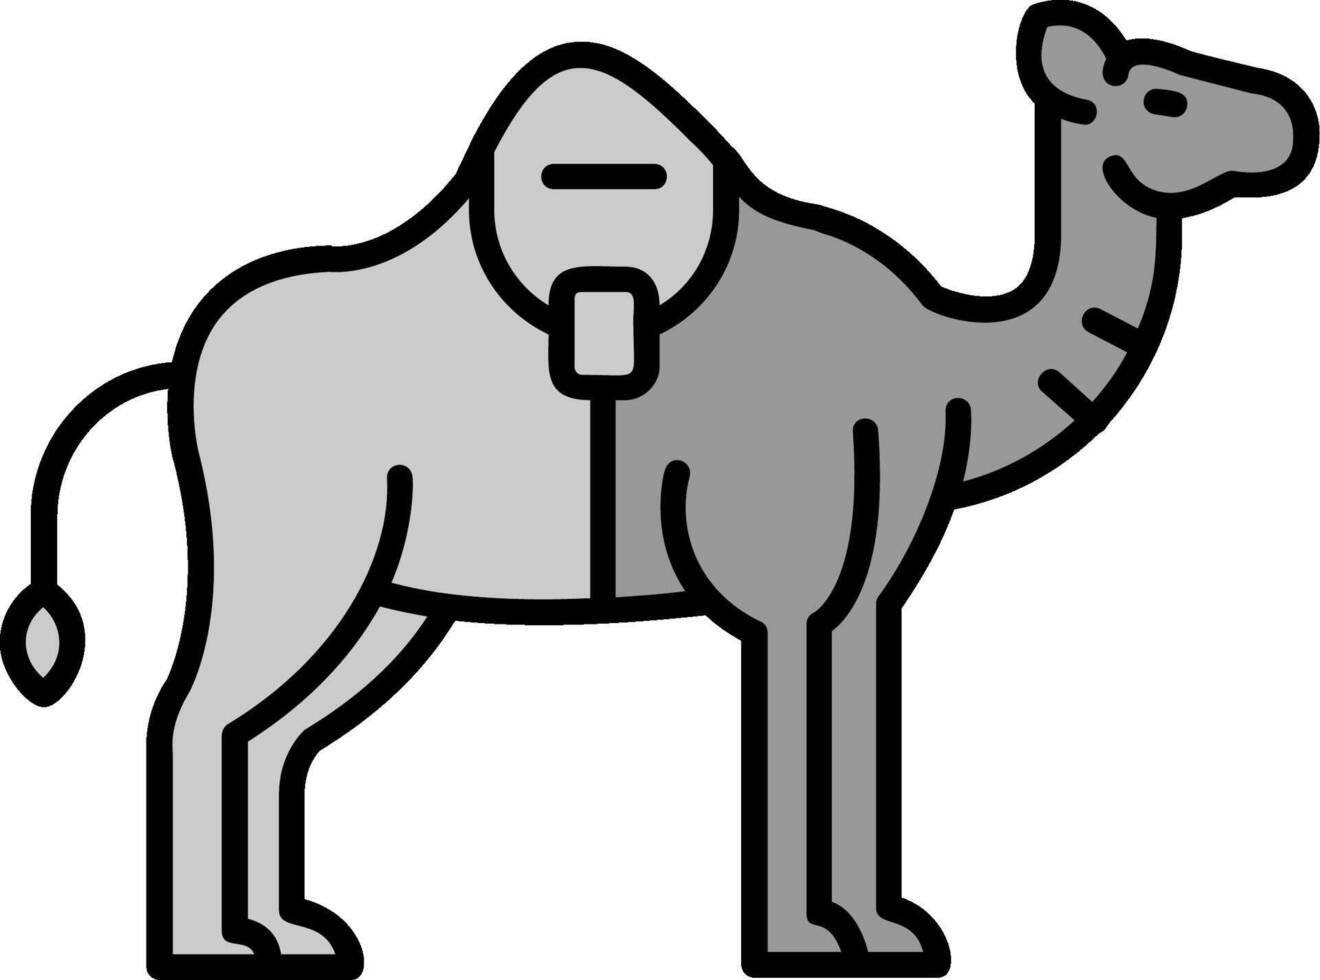 camello línea lleno escala de grises icono vector